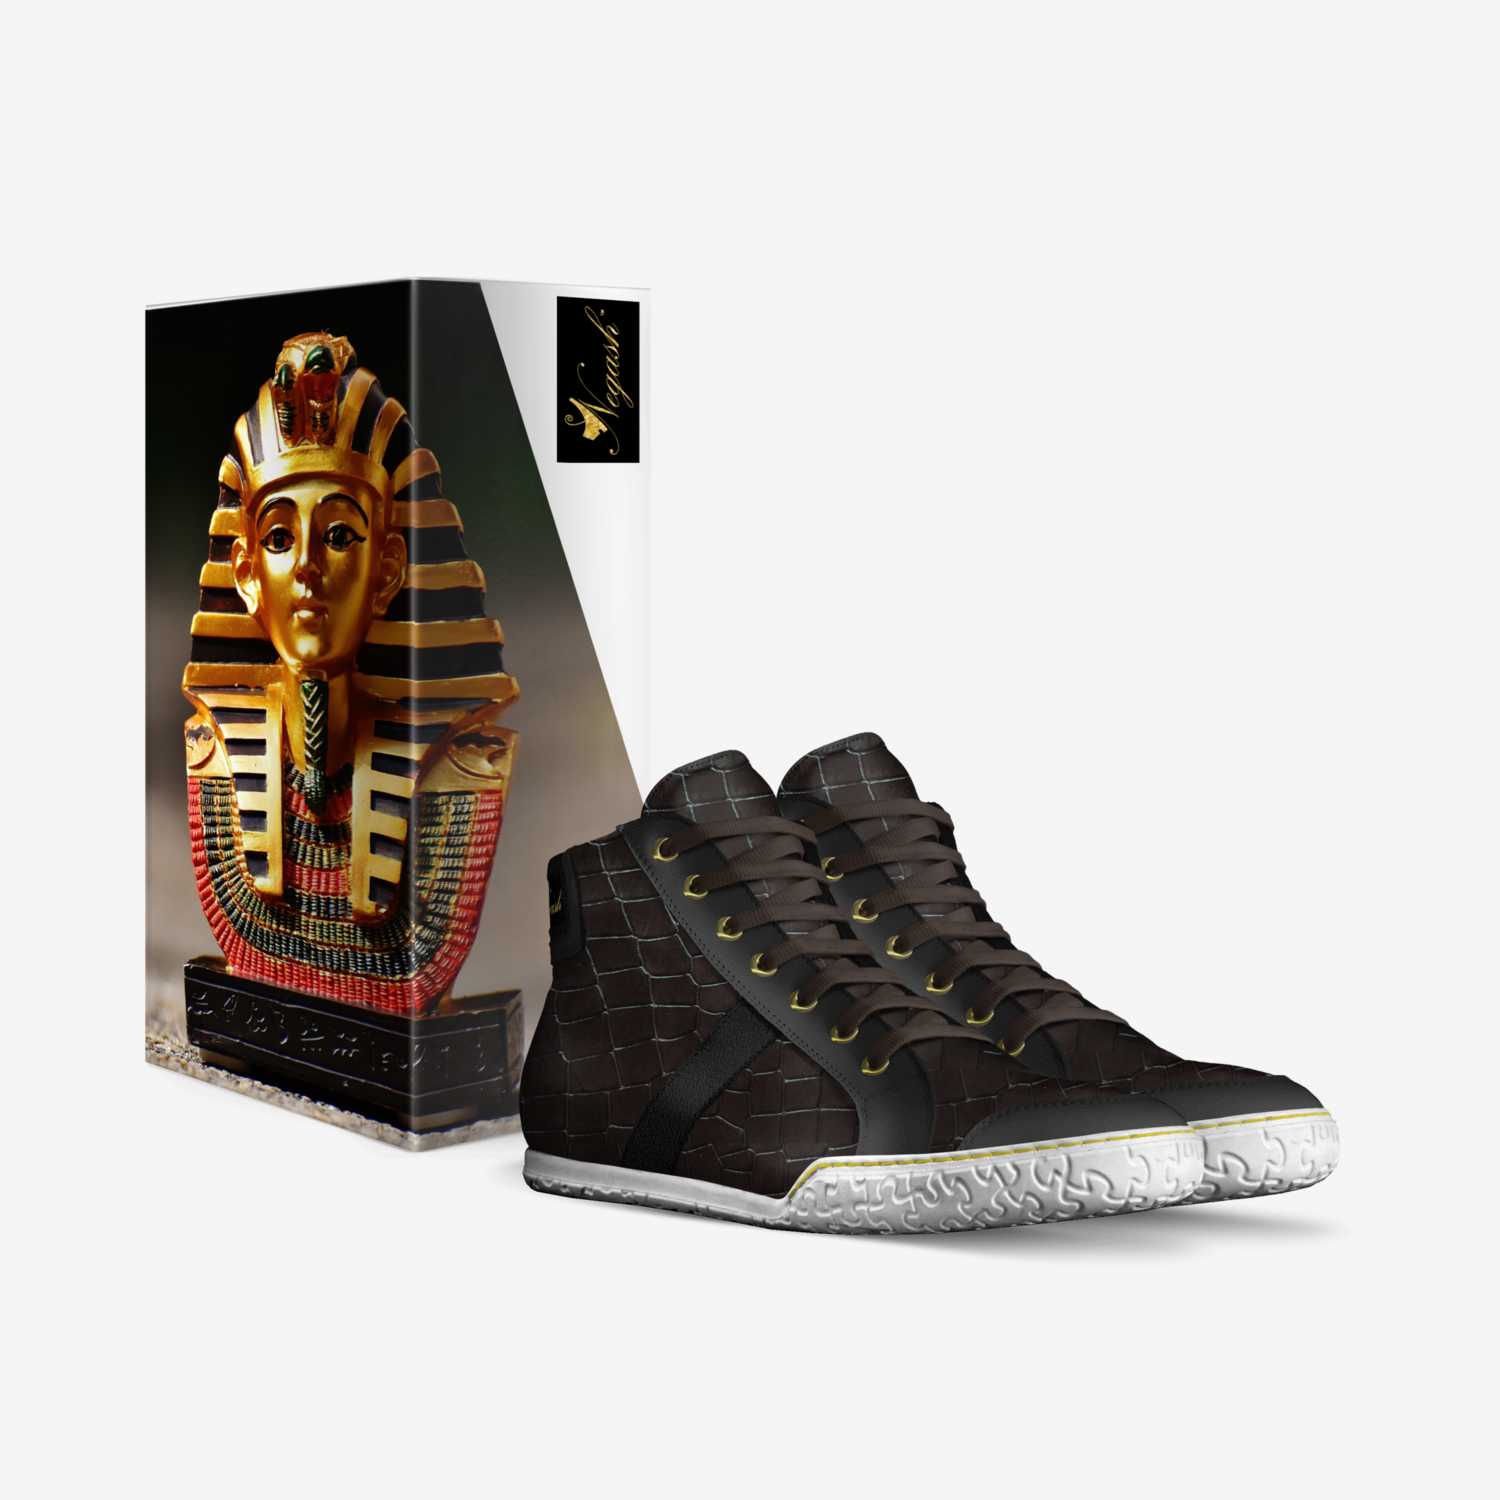 Negash Sobek Nero custom made in Italy shoes by Rocklin Negash | Box view